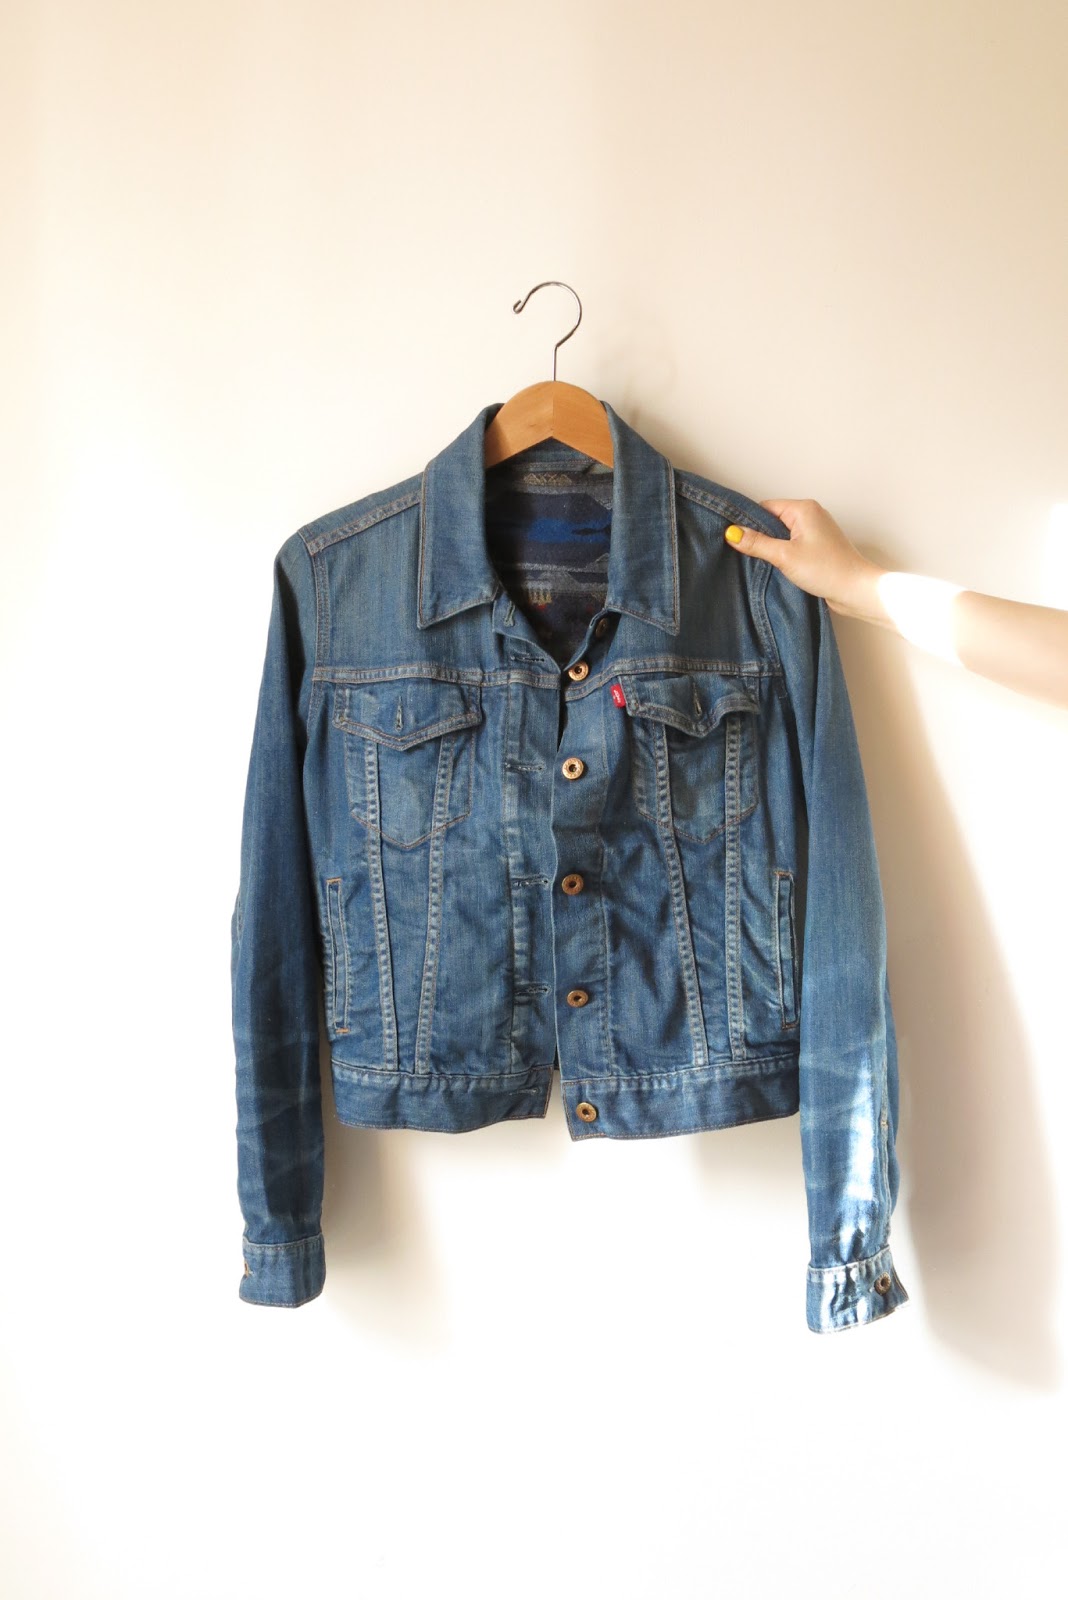 shopmycloset: the shop-blog: [SOLD] Levis x Pendleton Denim Jacket $50